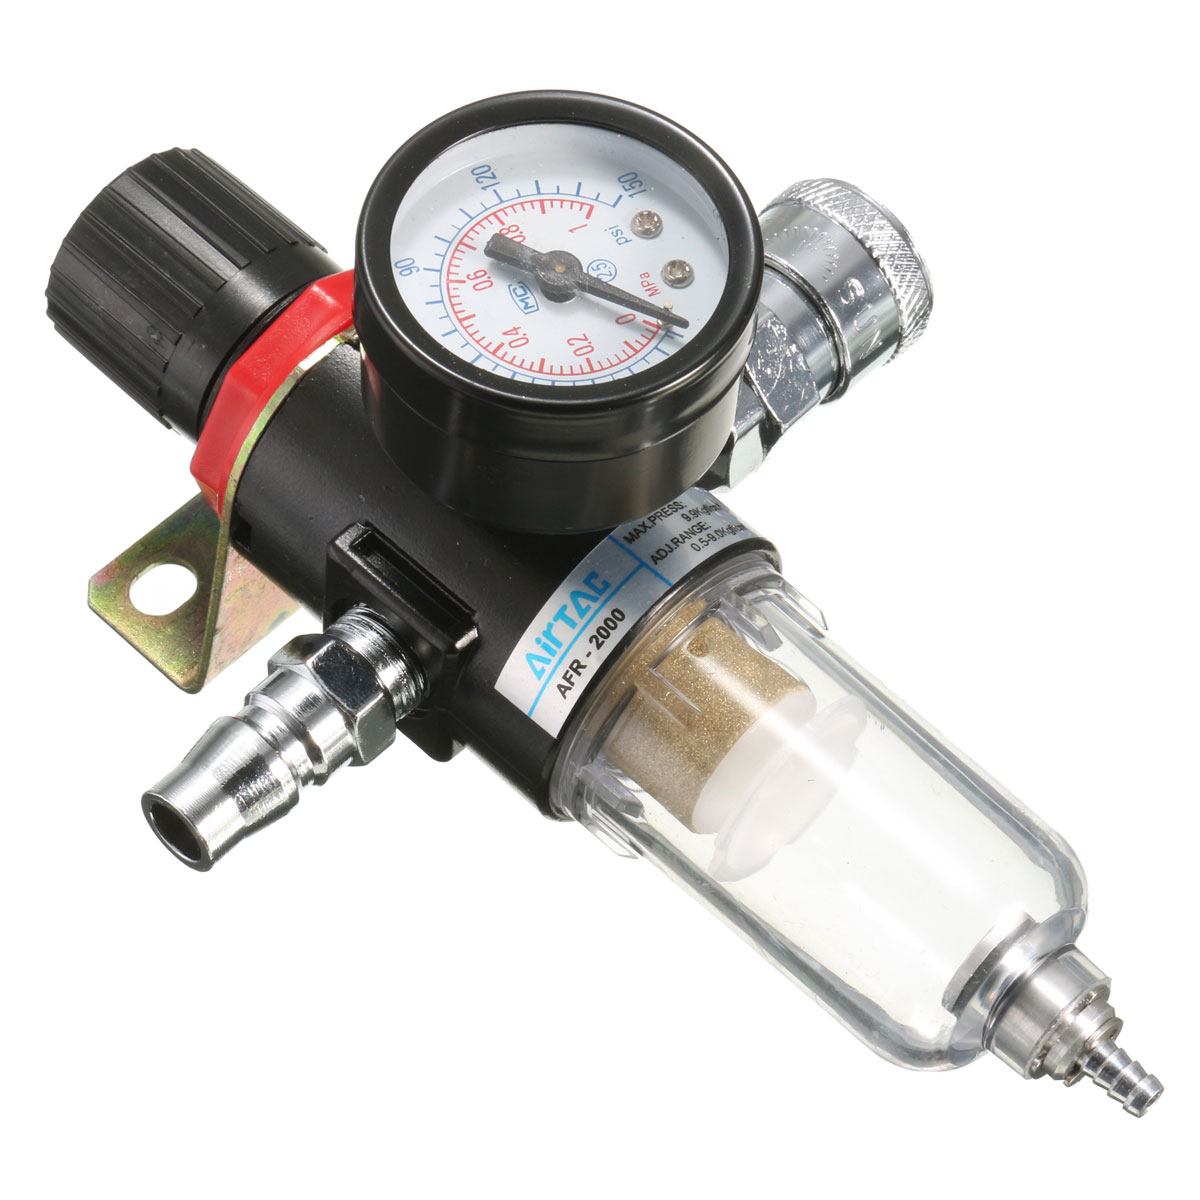 1 x AFR2000 Air Filter Regulator Source Treatment Units Oil Water Separator